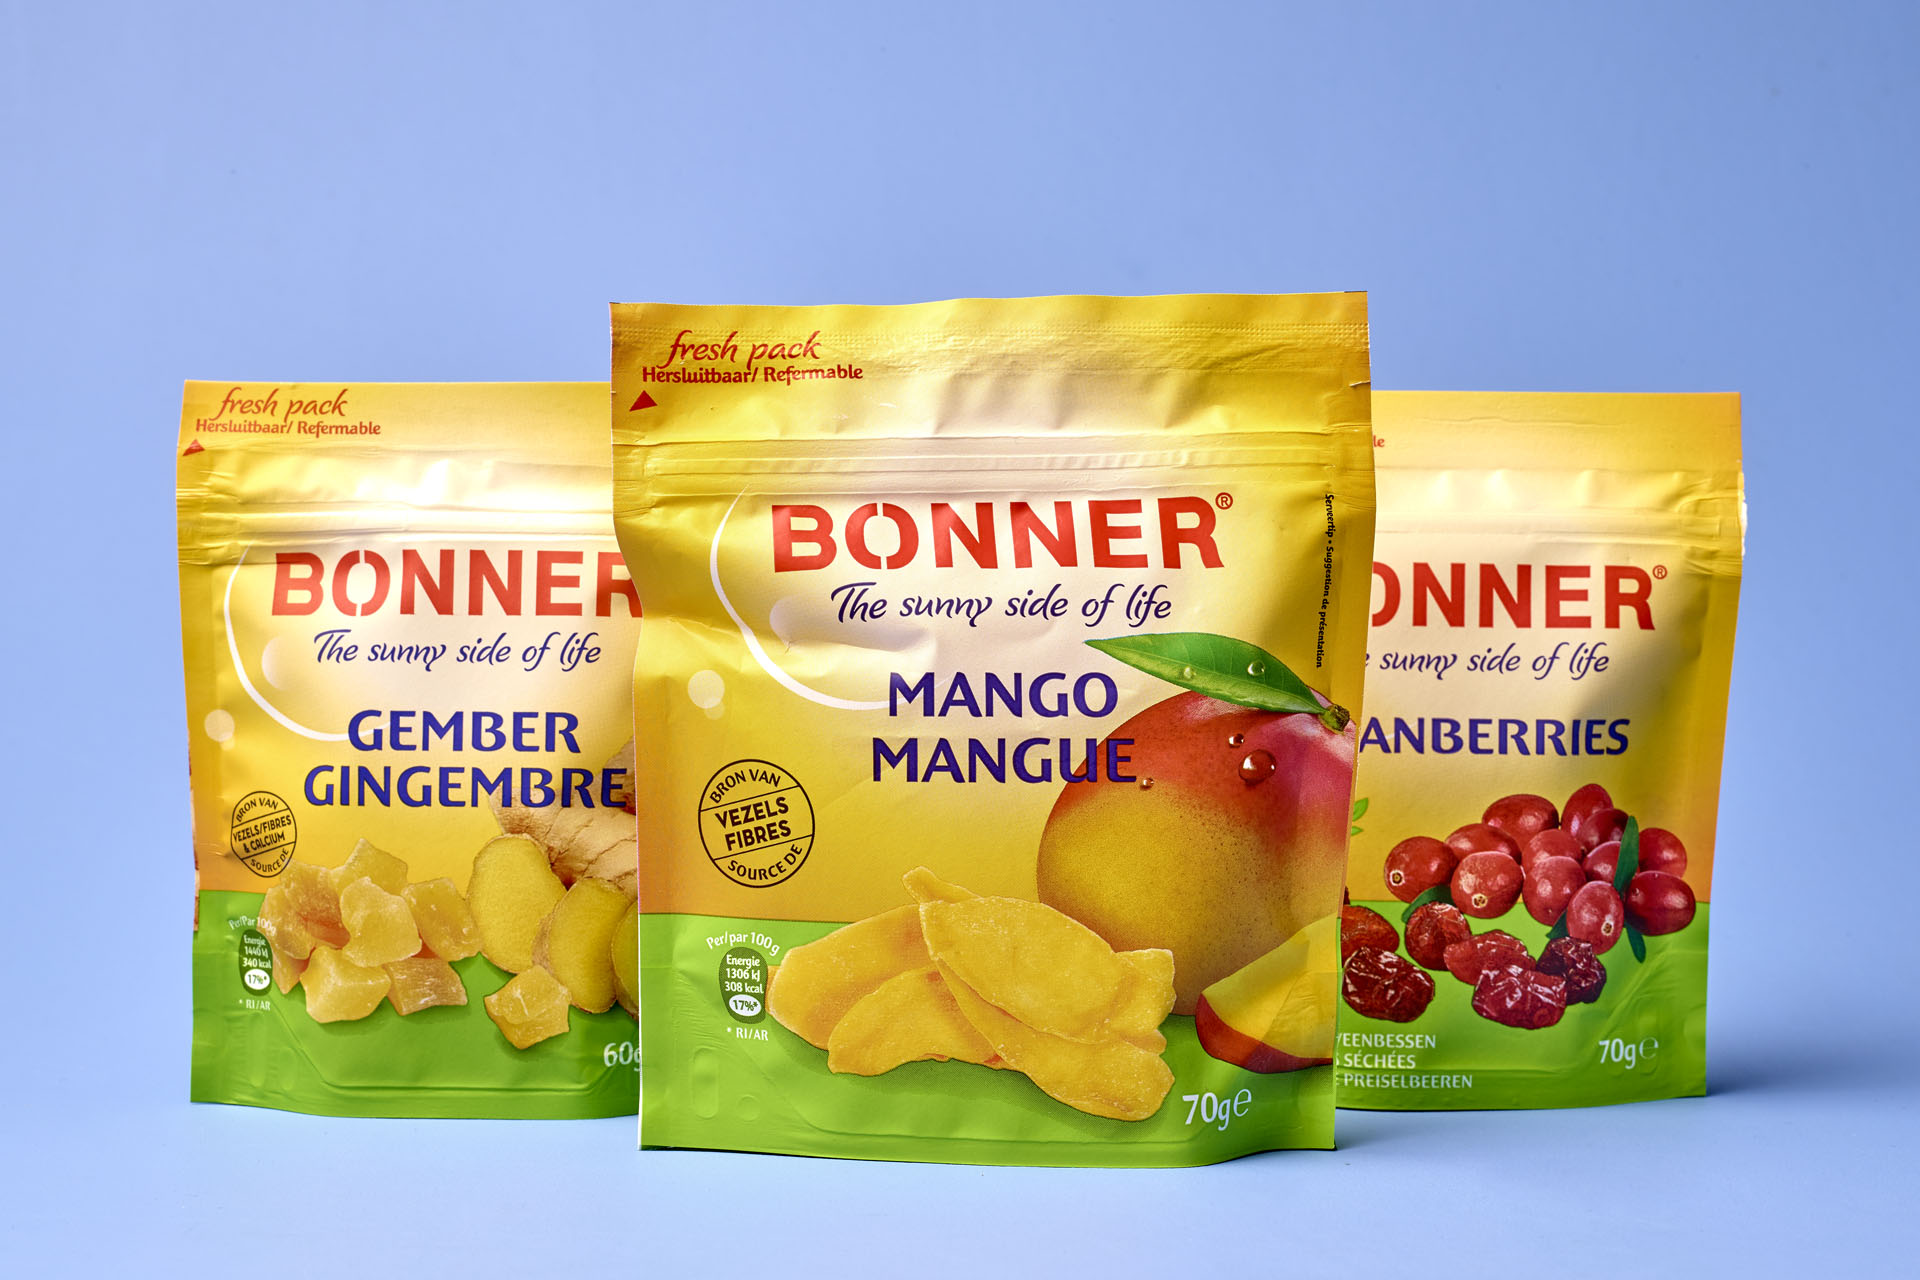 Bonner brand relift by DesignRepublic, branding and packaging design agency Belgium